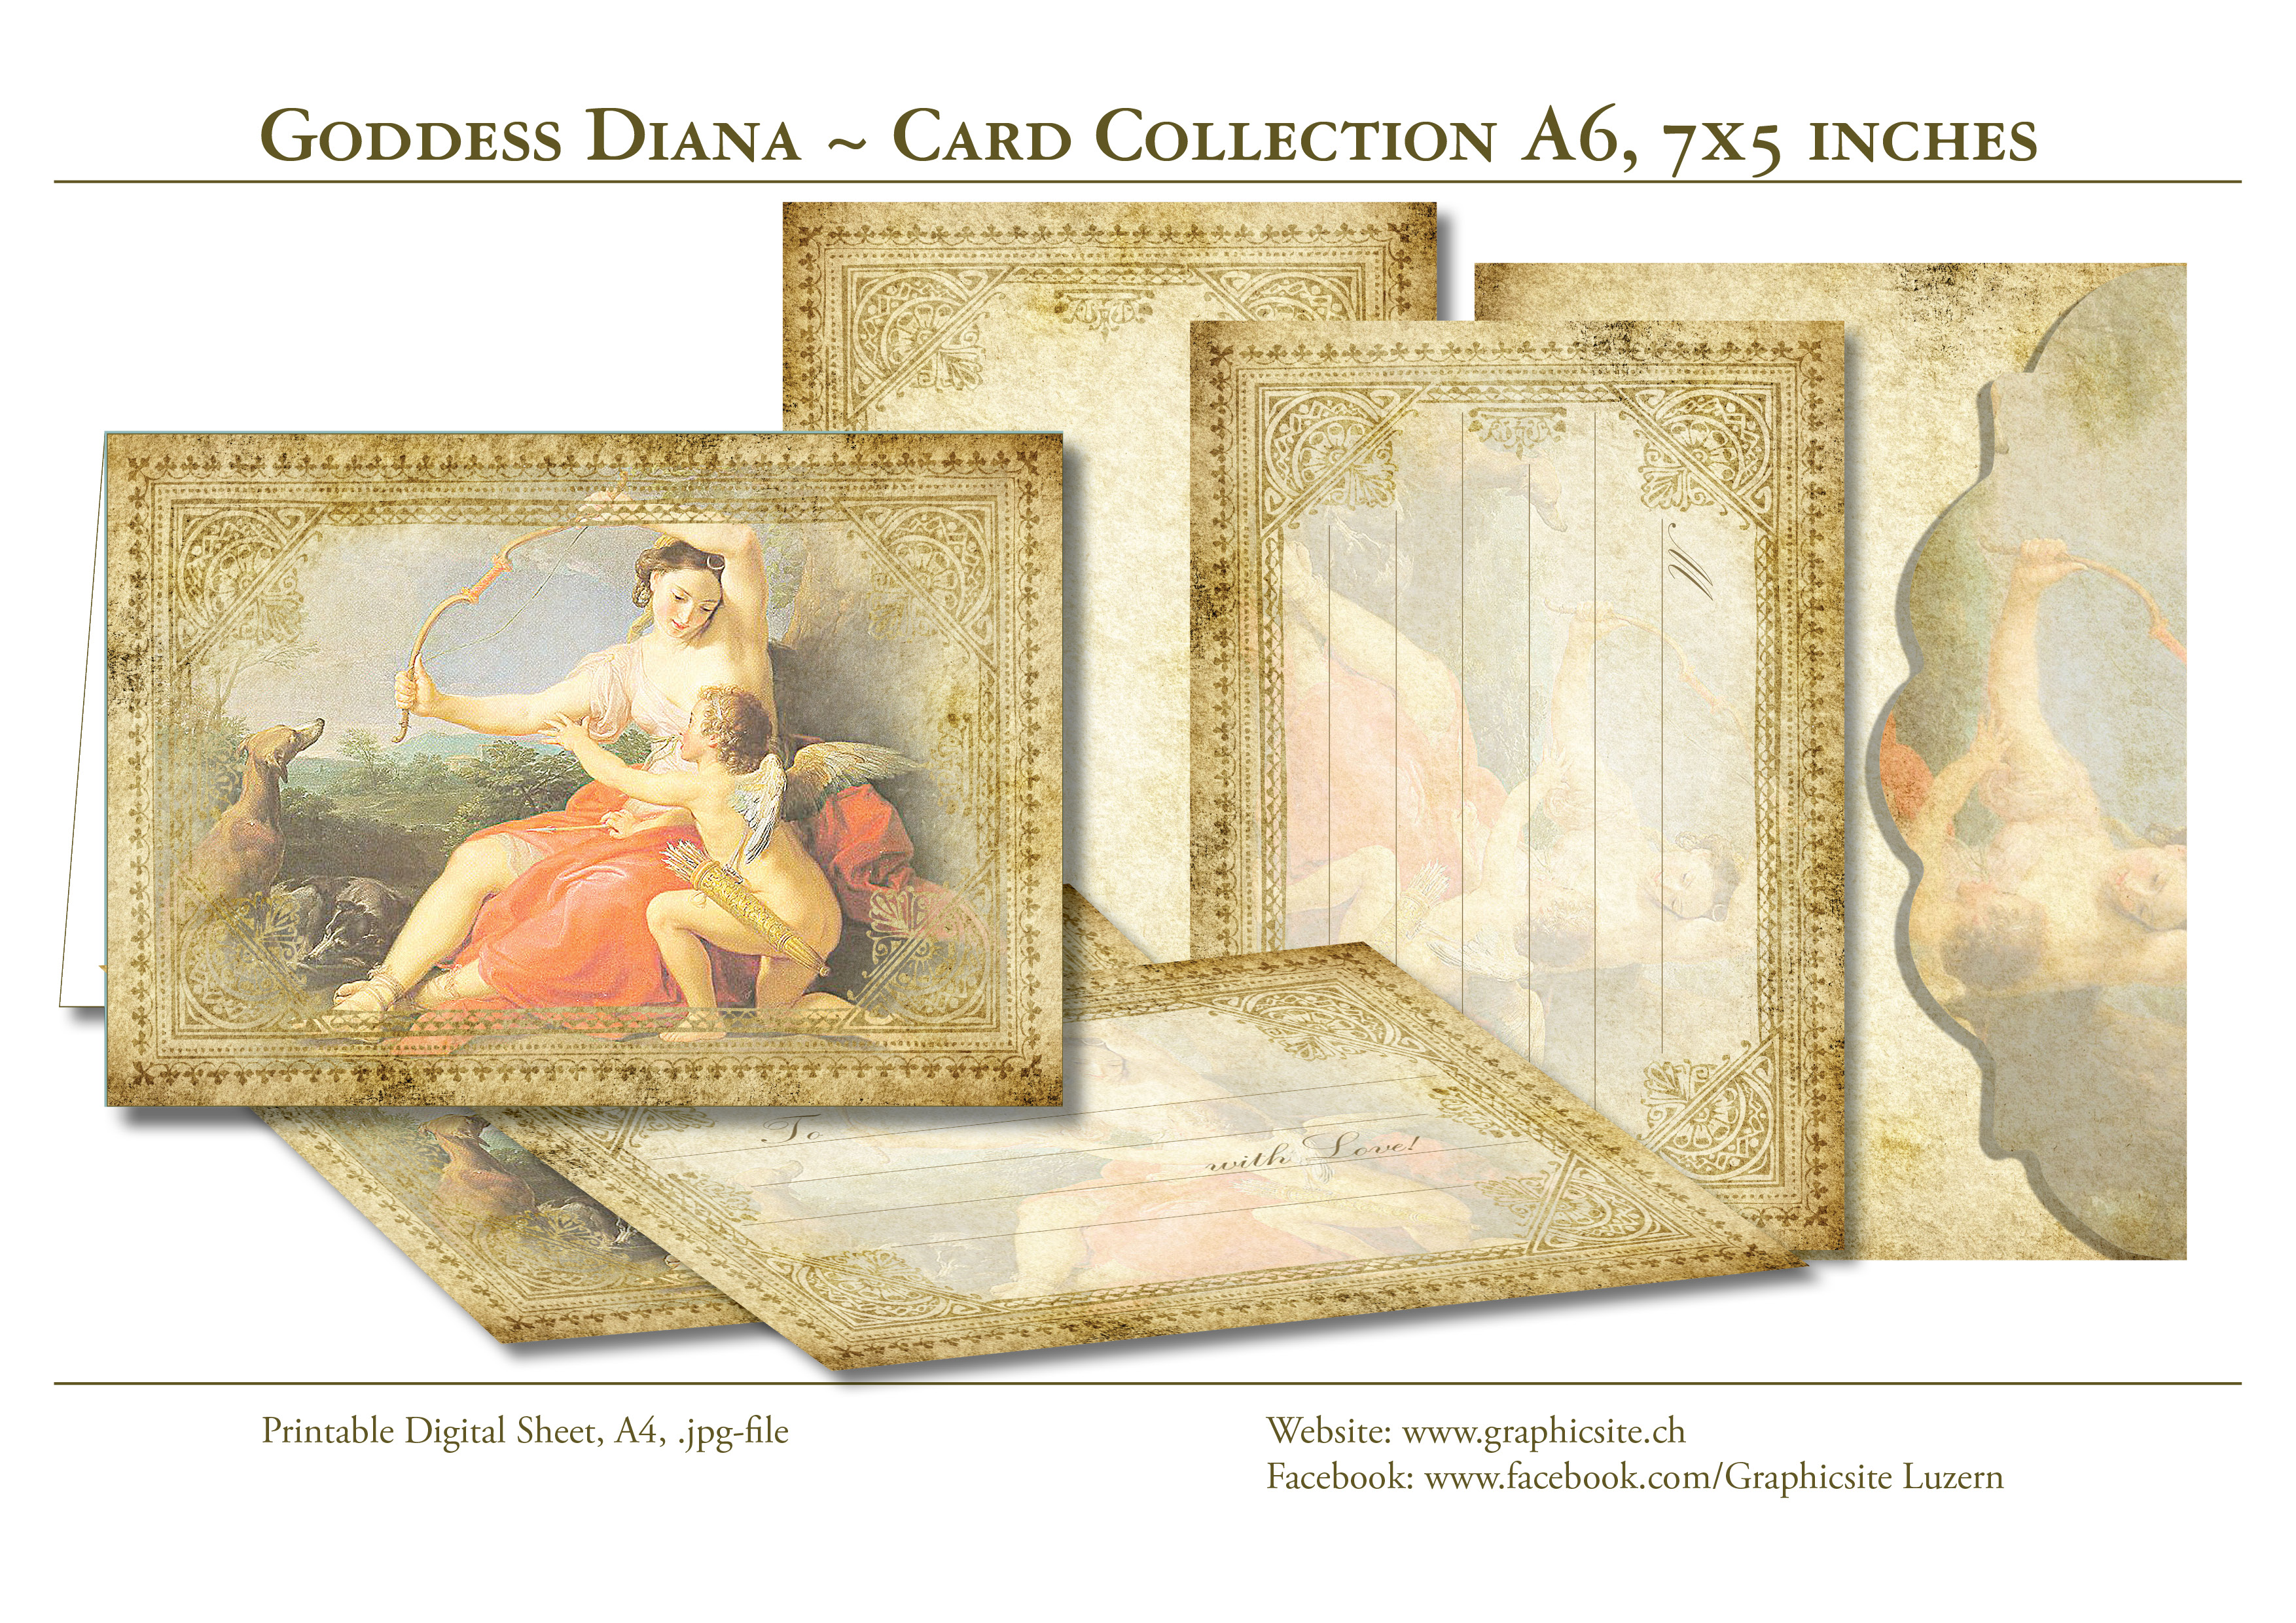 Printable Digital Sheets - Card Collection A6 - Goddess Diana